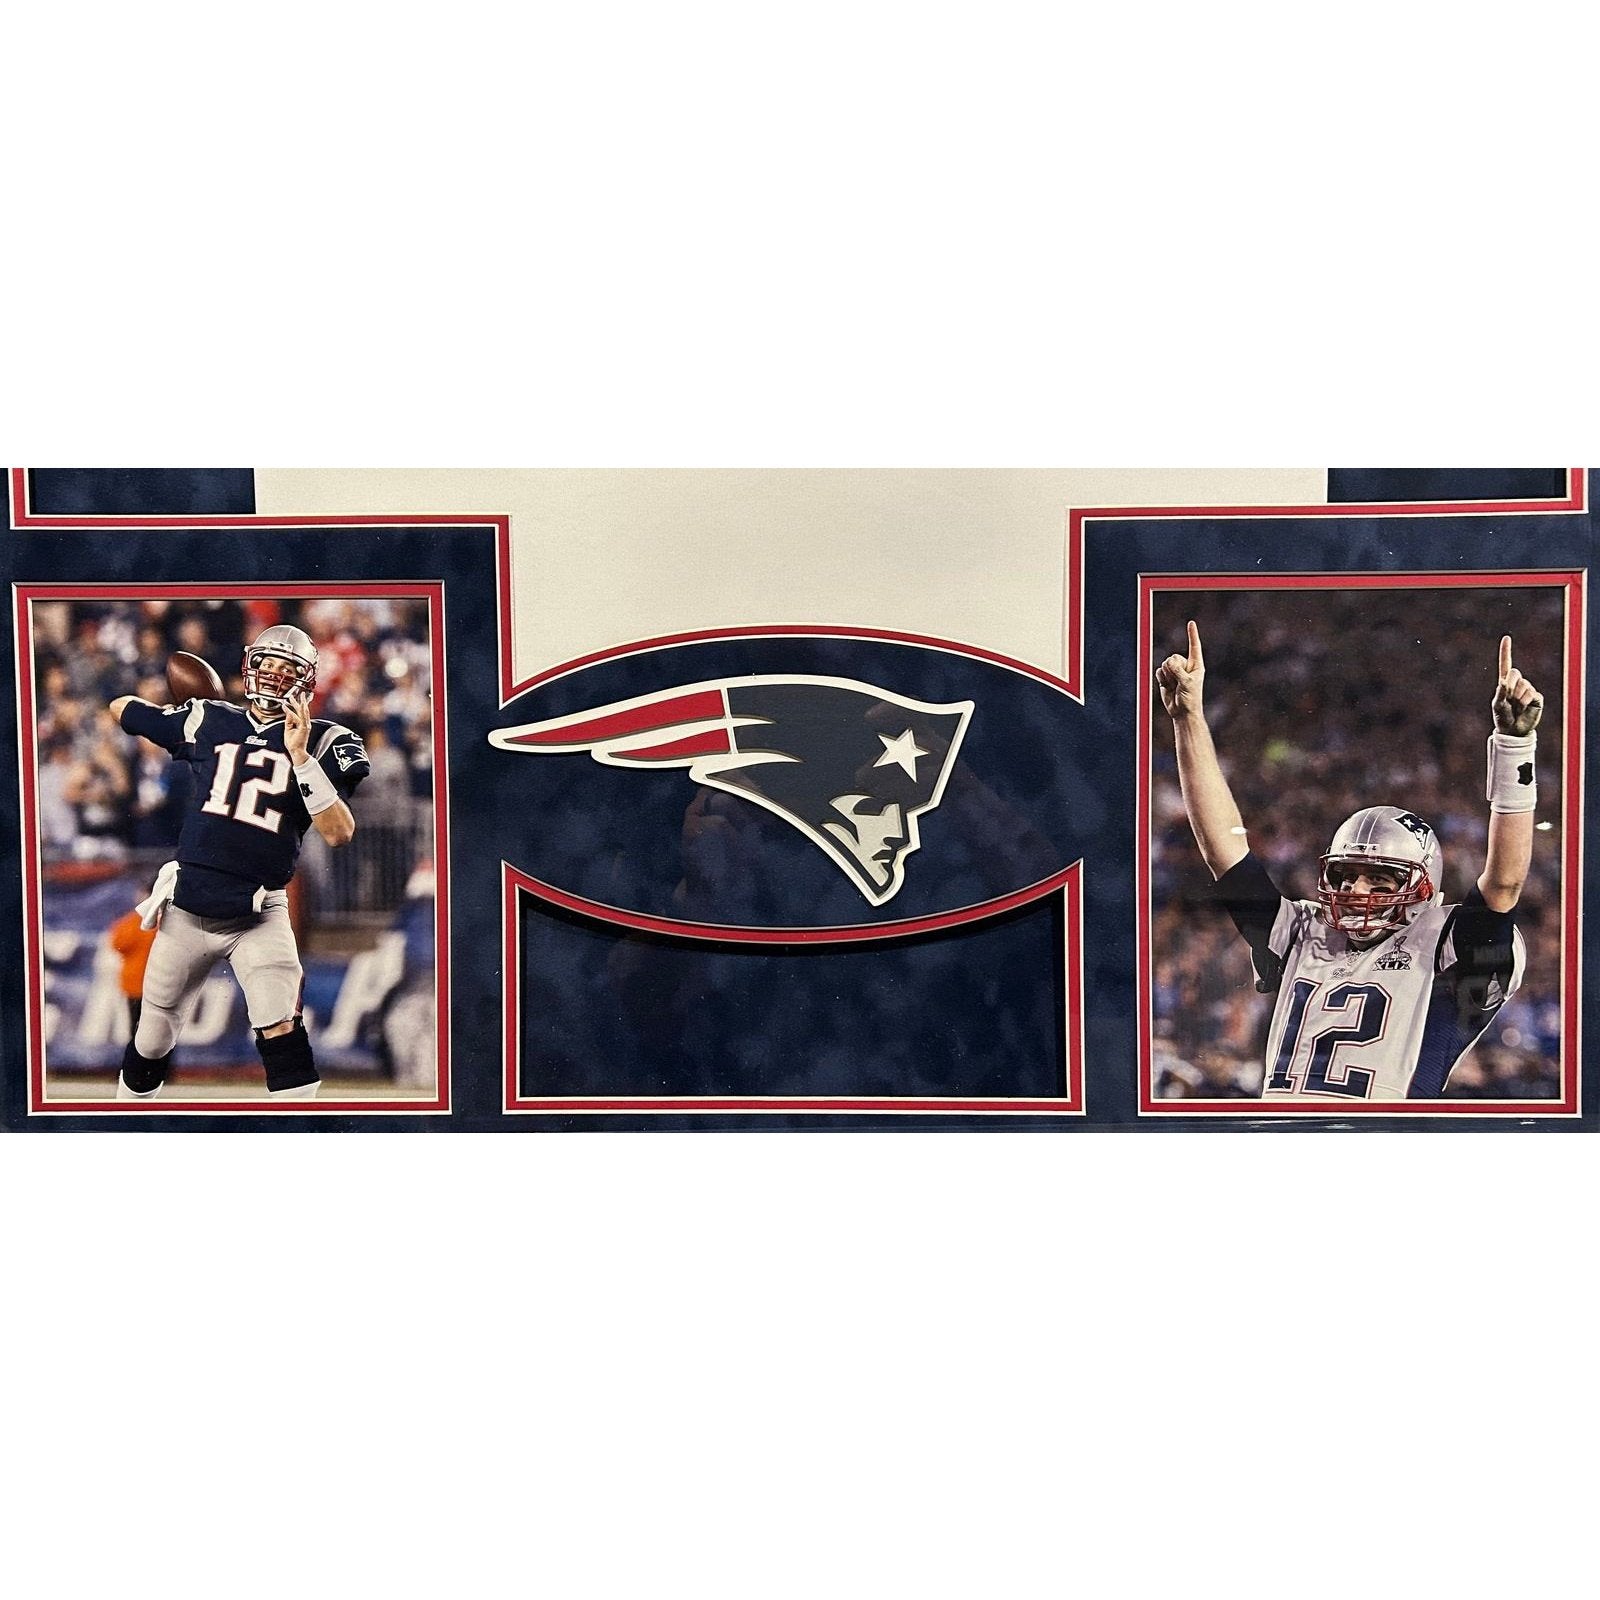 Tom Brady Framed Signed Jersey Fanatics New England Patriots Autograph